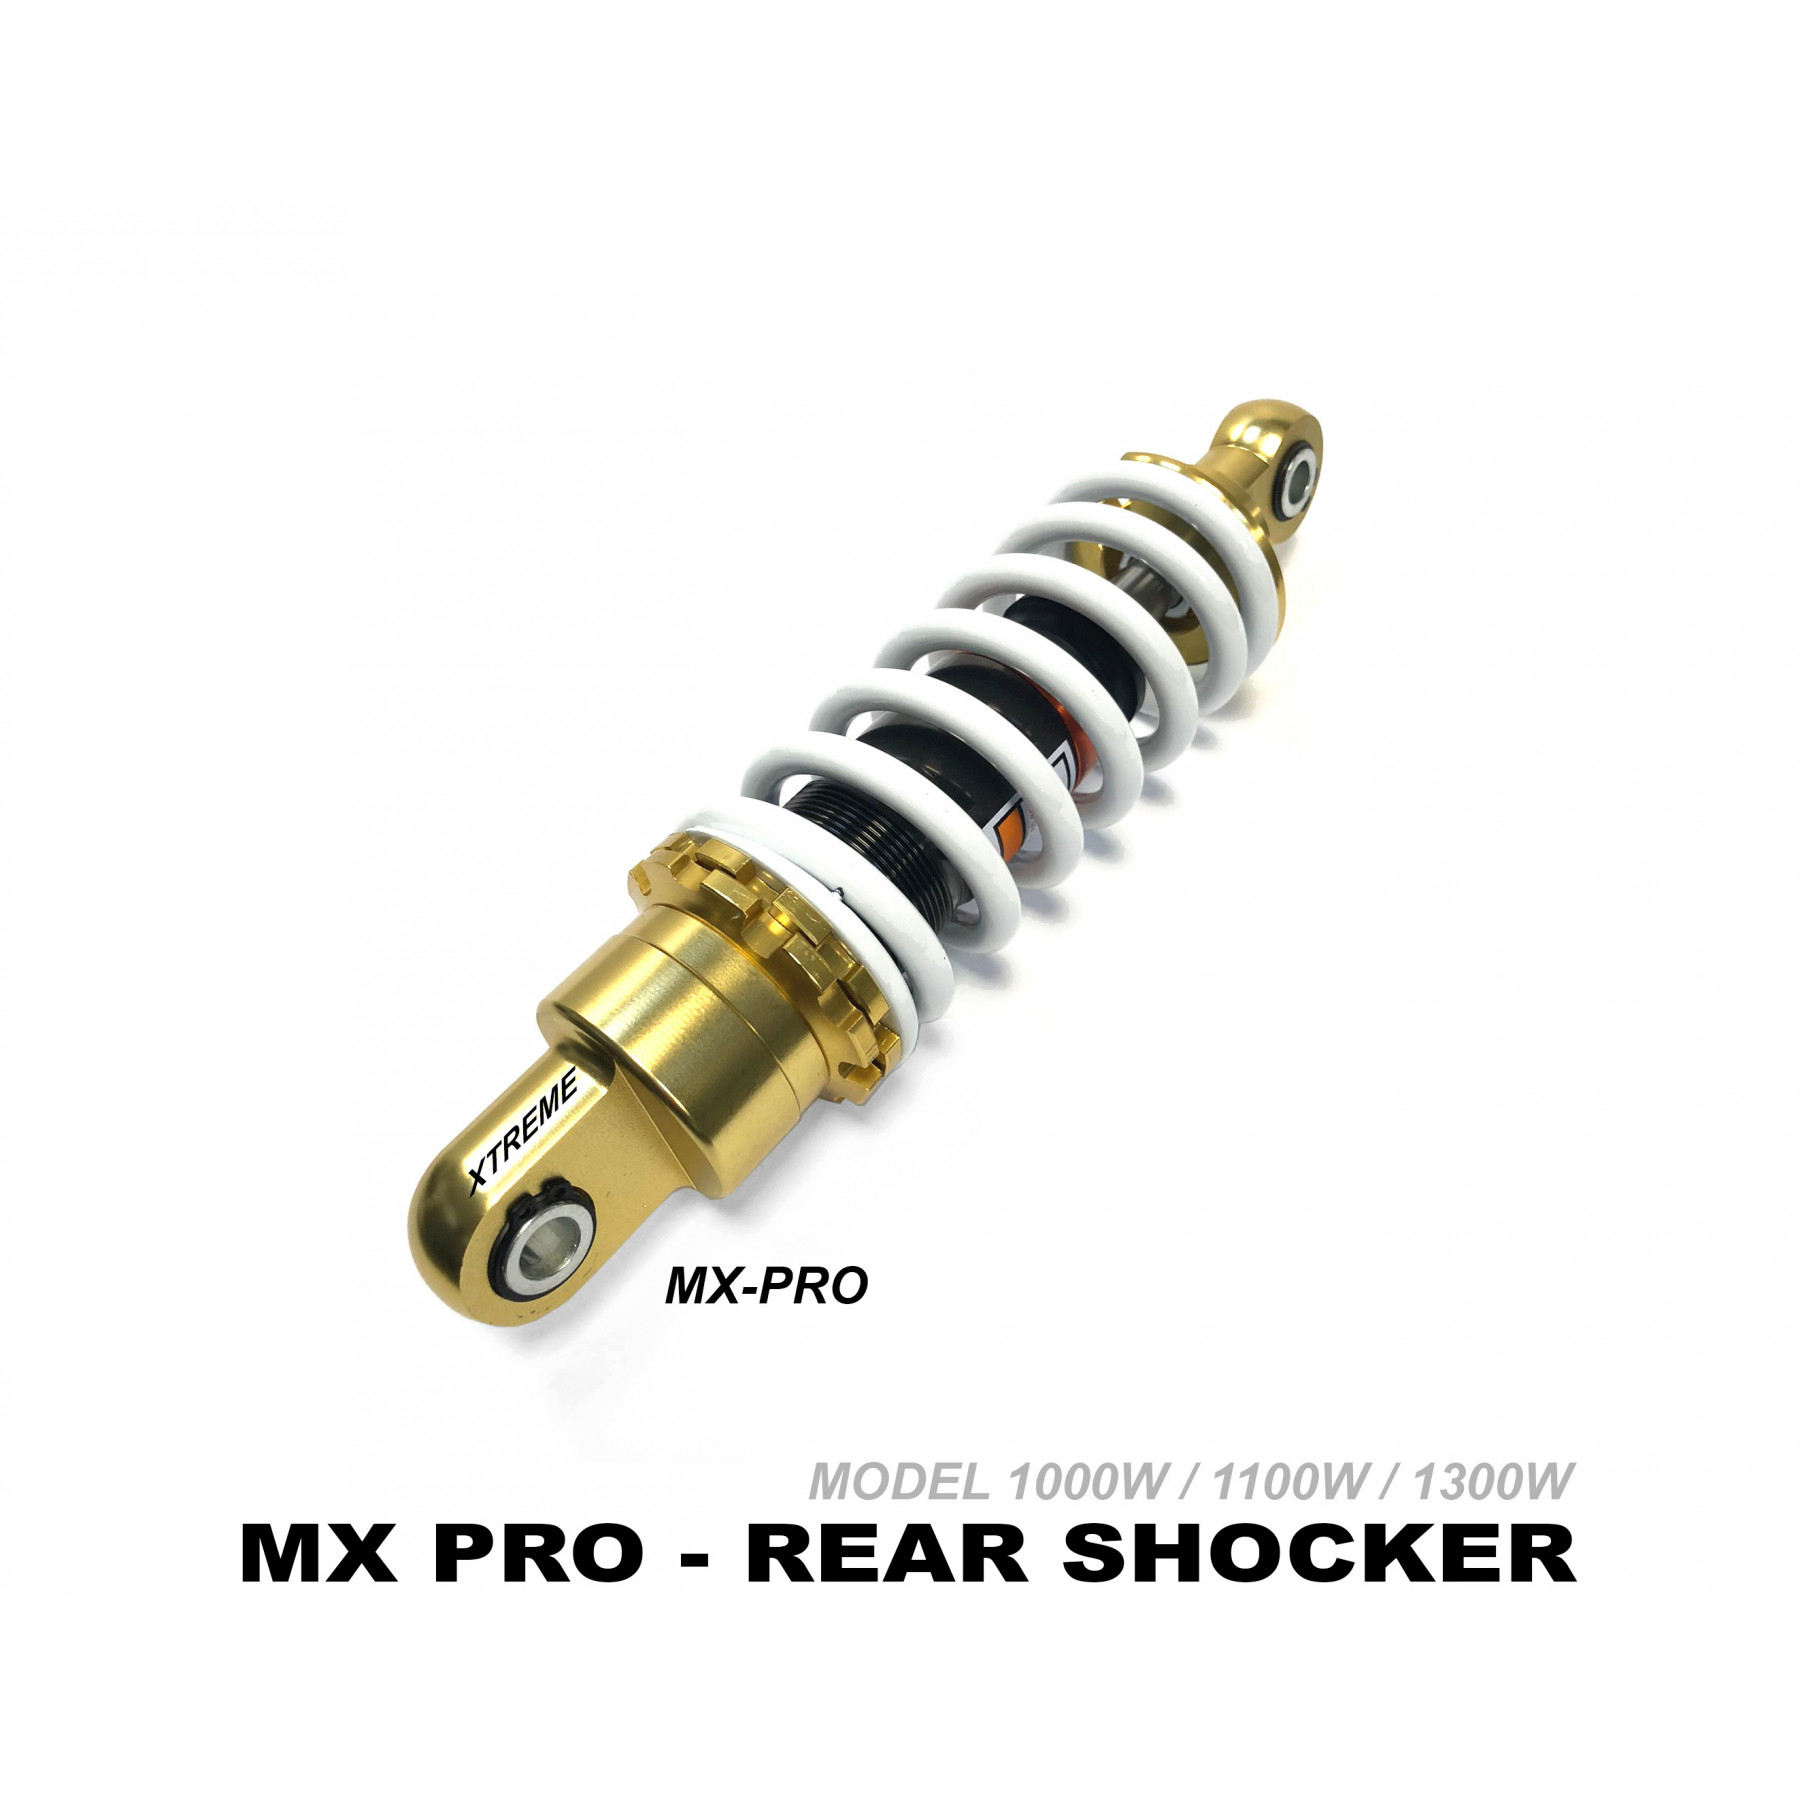 XTREME ELECTRIC XTM MX-PRO 36V REPLACEMENT REAR SHOCKER